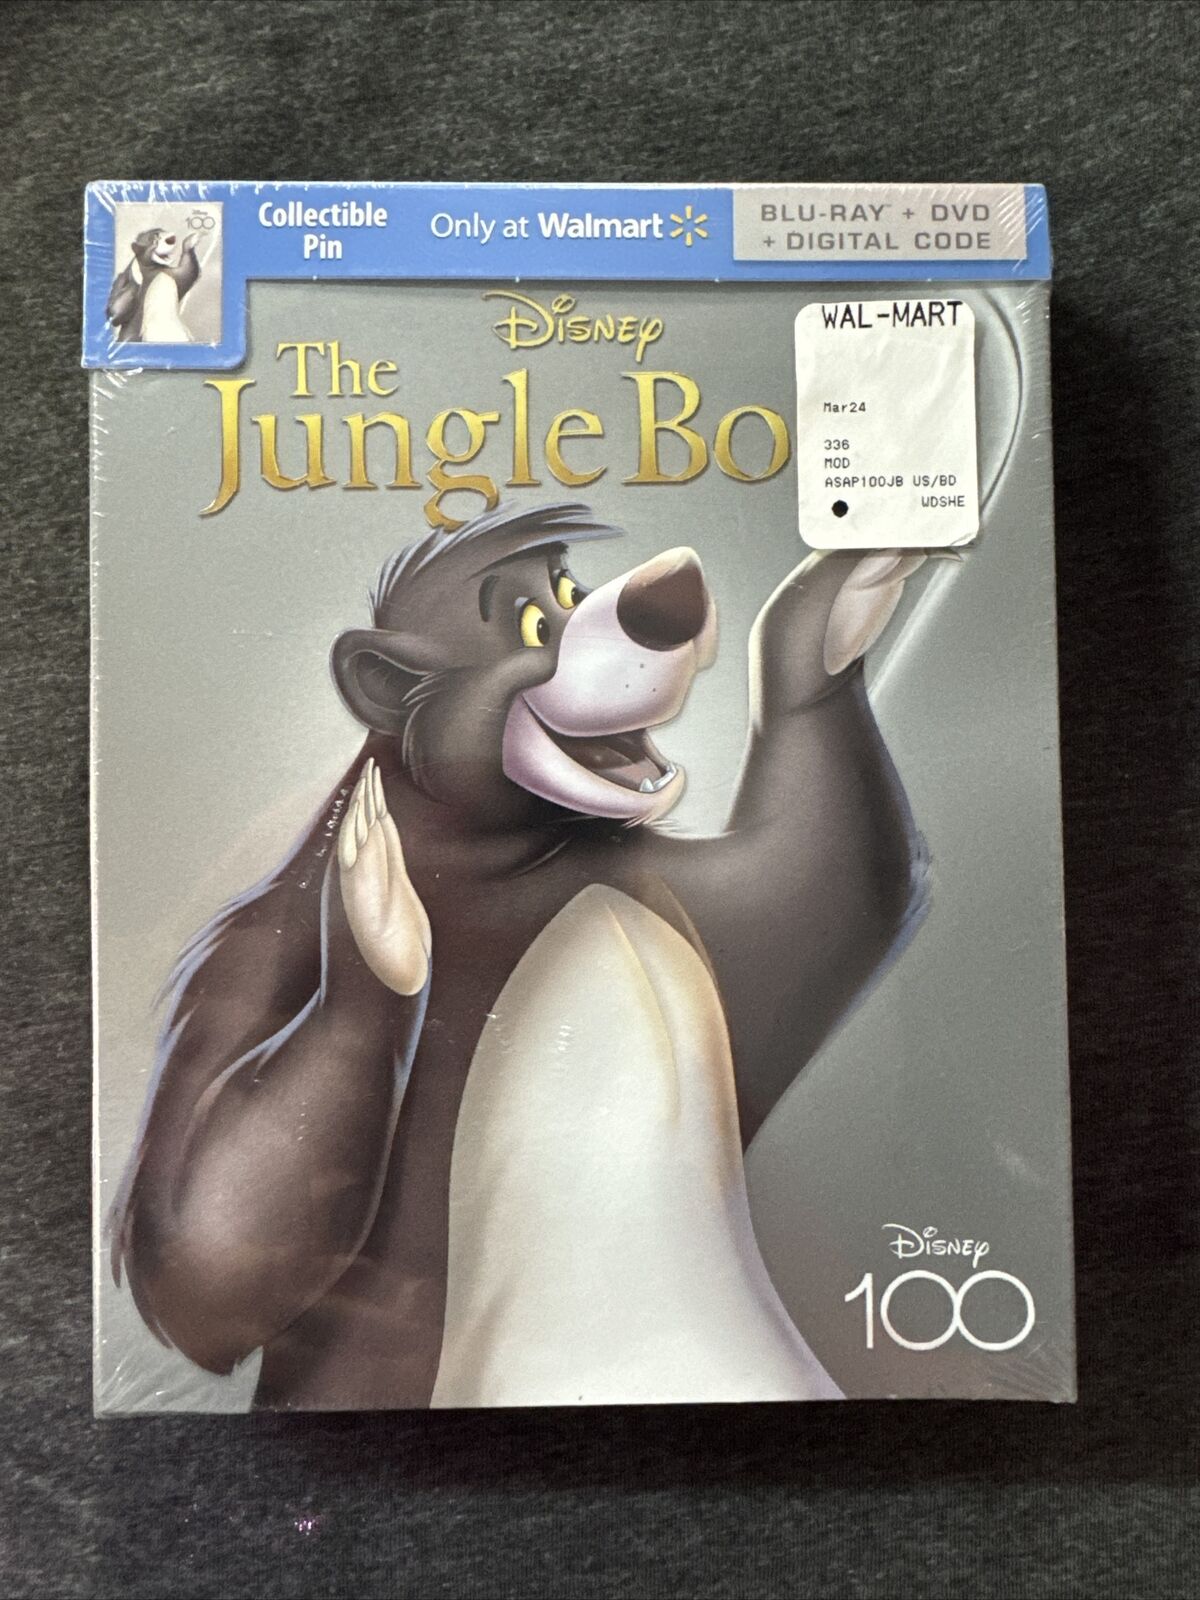 Walt Disney Home Video The Jungle Book - Disney100 Edition (Blu-ray + DVD +